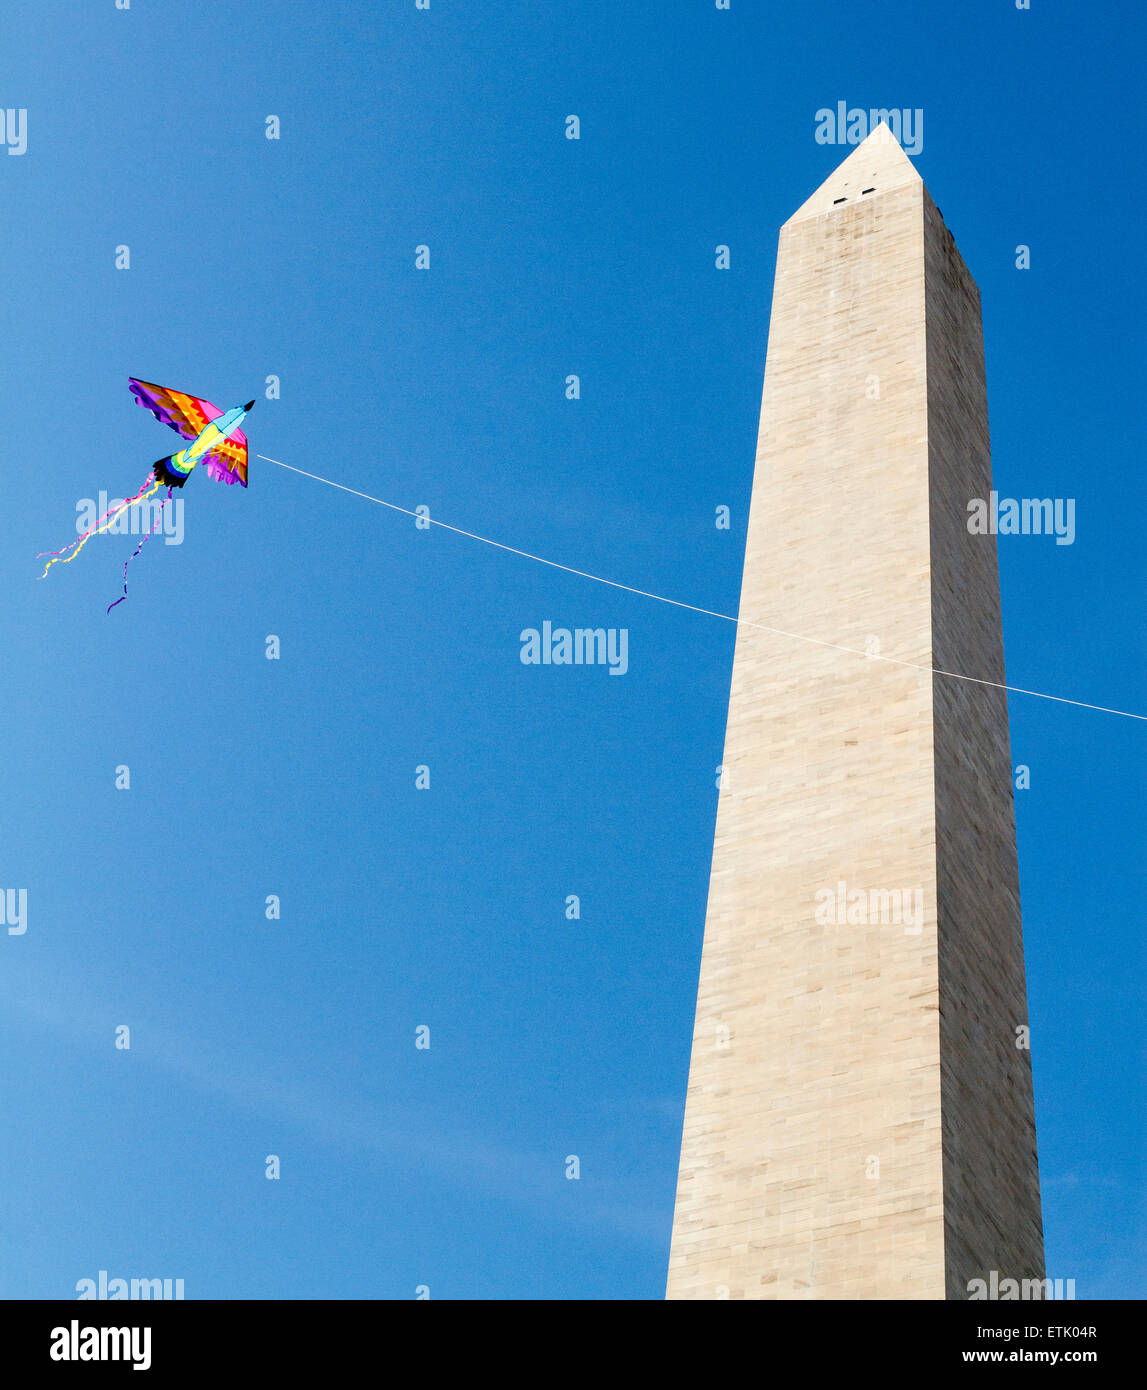 Ein Drachen fliegt durch das Washington Monument, Washington DC Stockfoto